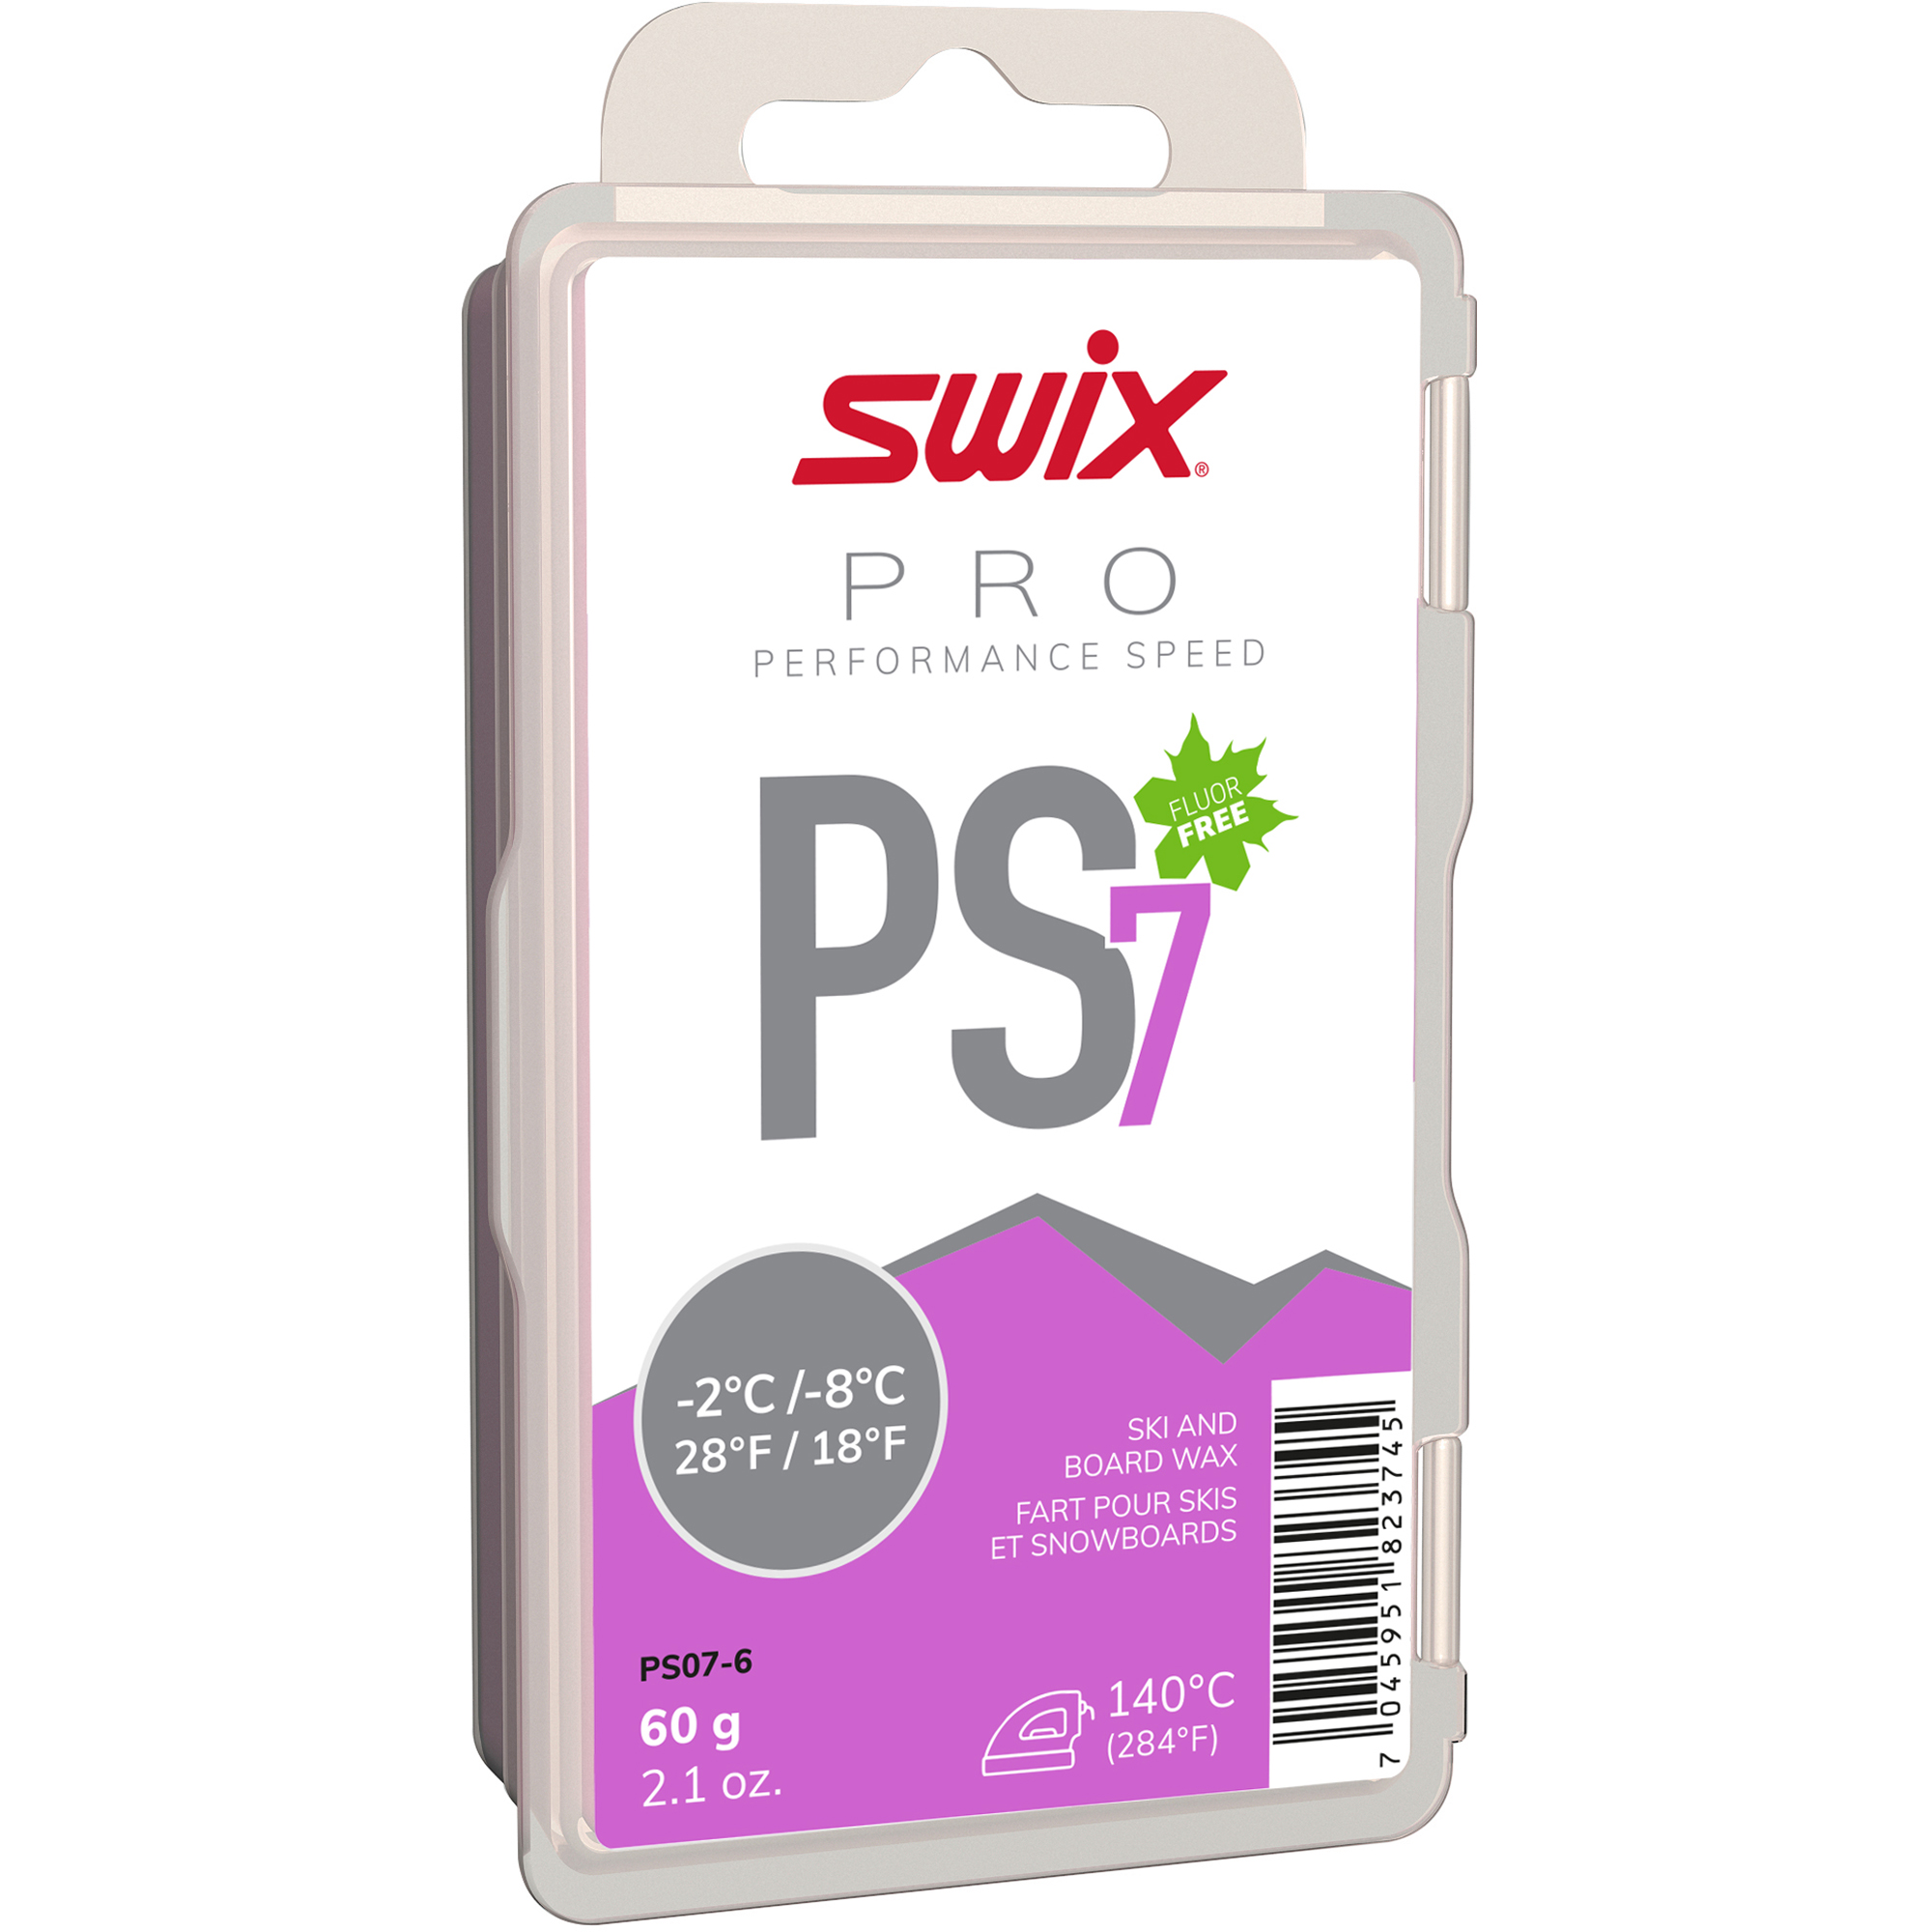 Swix PS7 Violet glidevoks 60 g